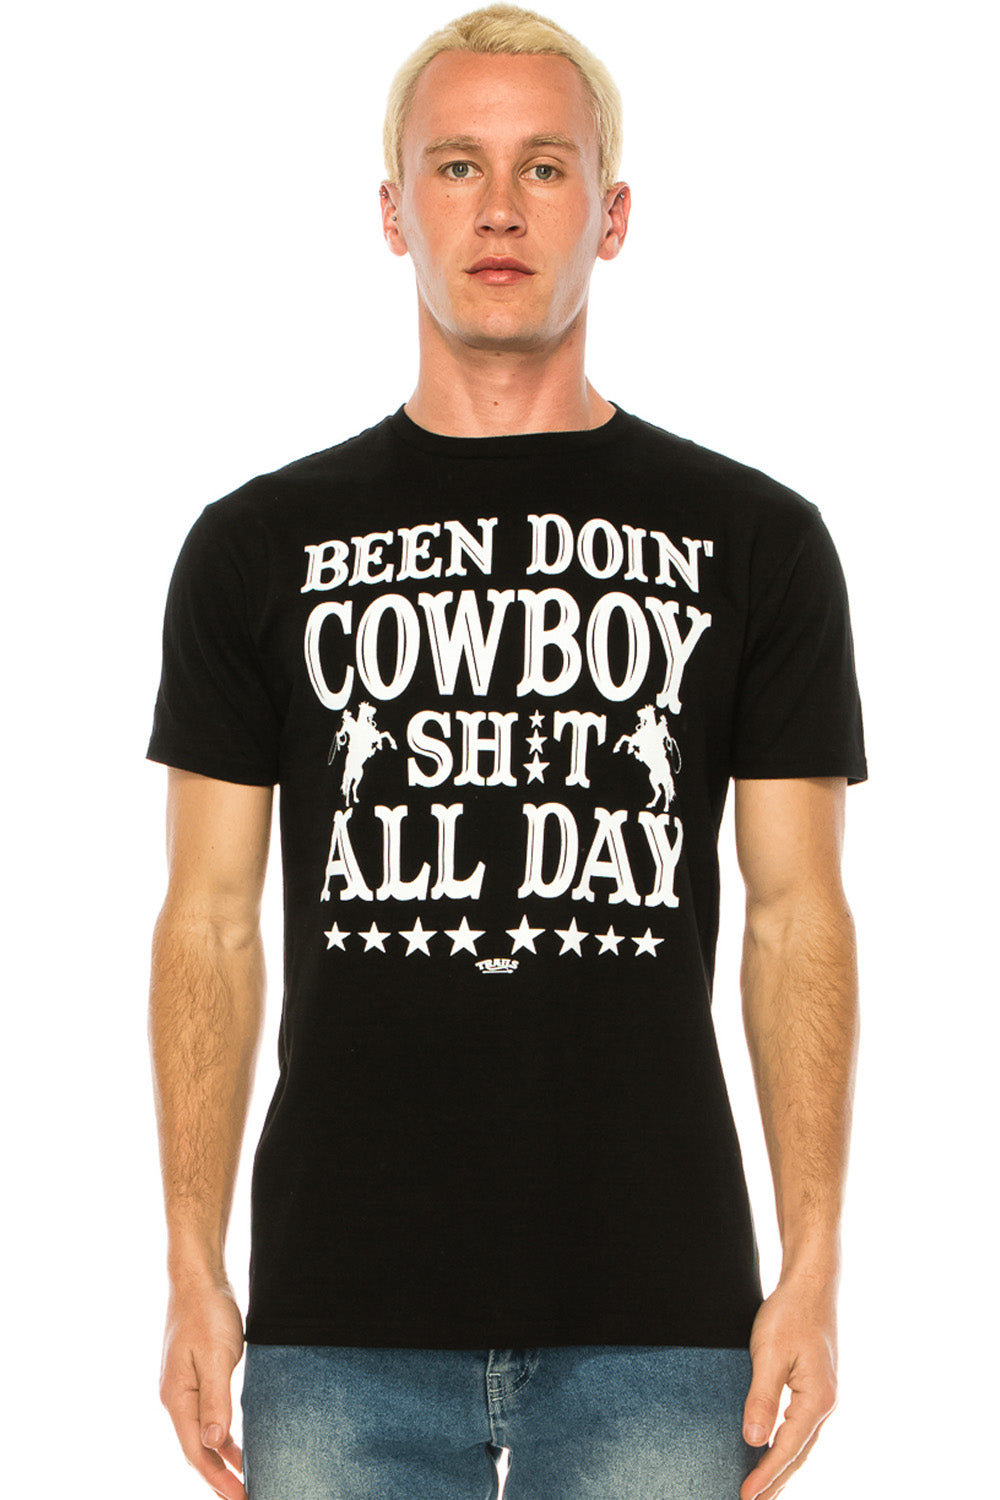 BEEN DOIN' COWBOY SH*T ALL DAY T-SHIRT - Trailsclothing.com